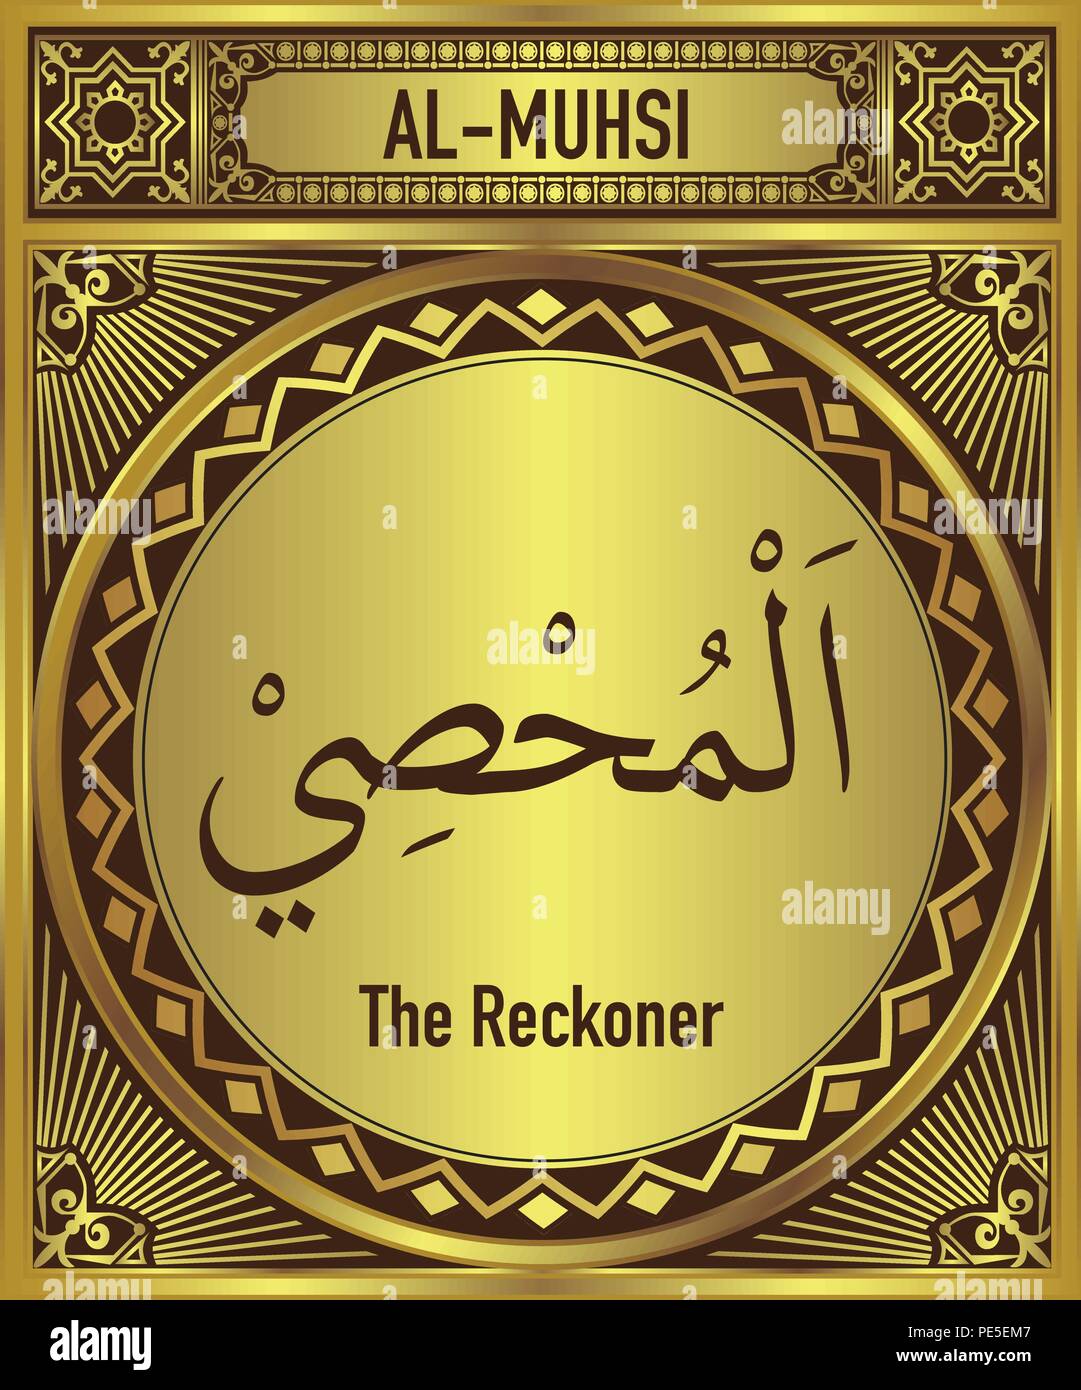 99 Beautiful Names Of Allah English Translate Below The Arabic